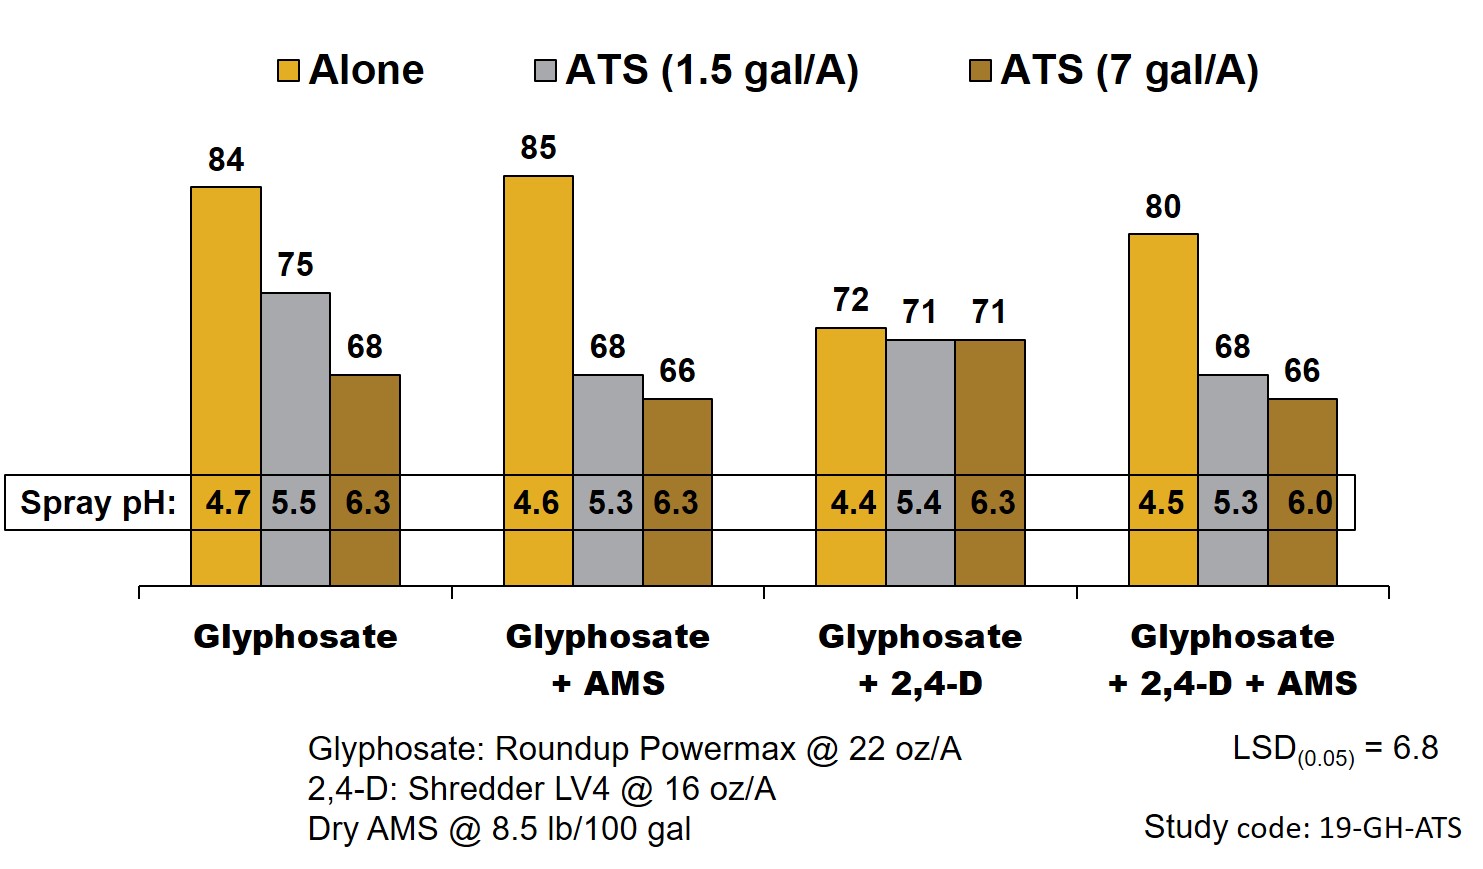 Figure 1. Effect of ammonium thiosulfate (ATS) on glyphosate activity on wheat seven days after treatment.